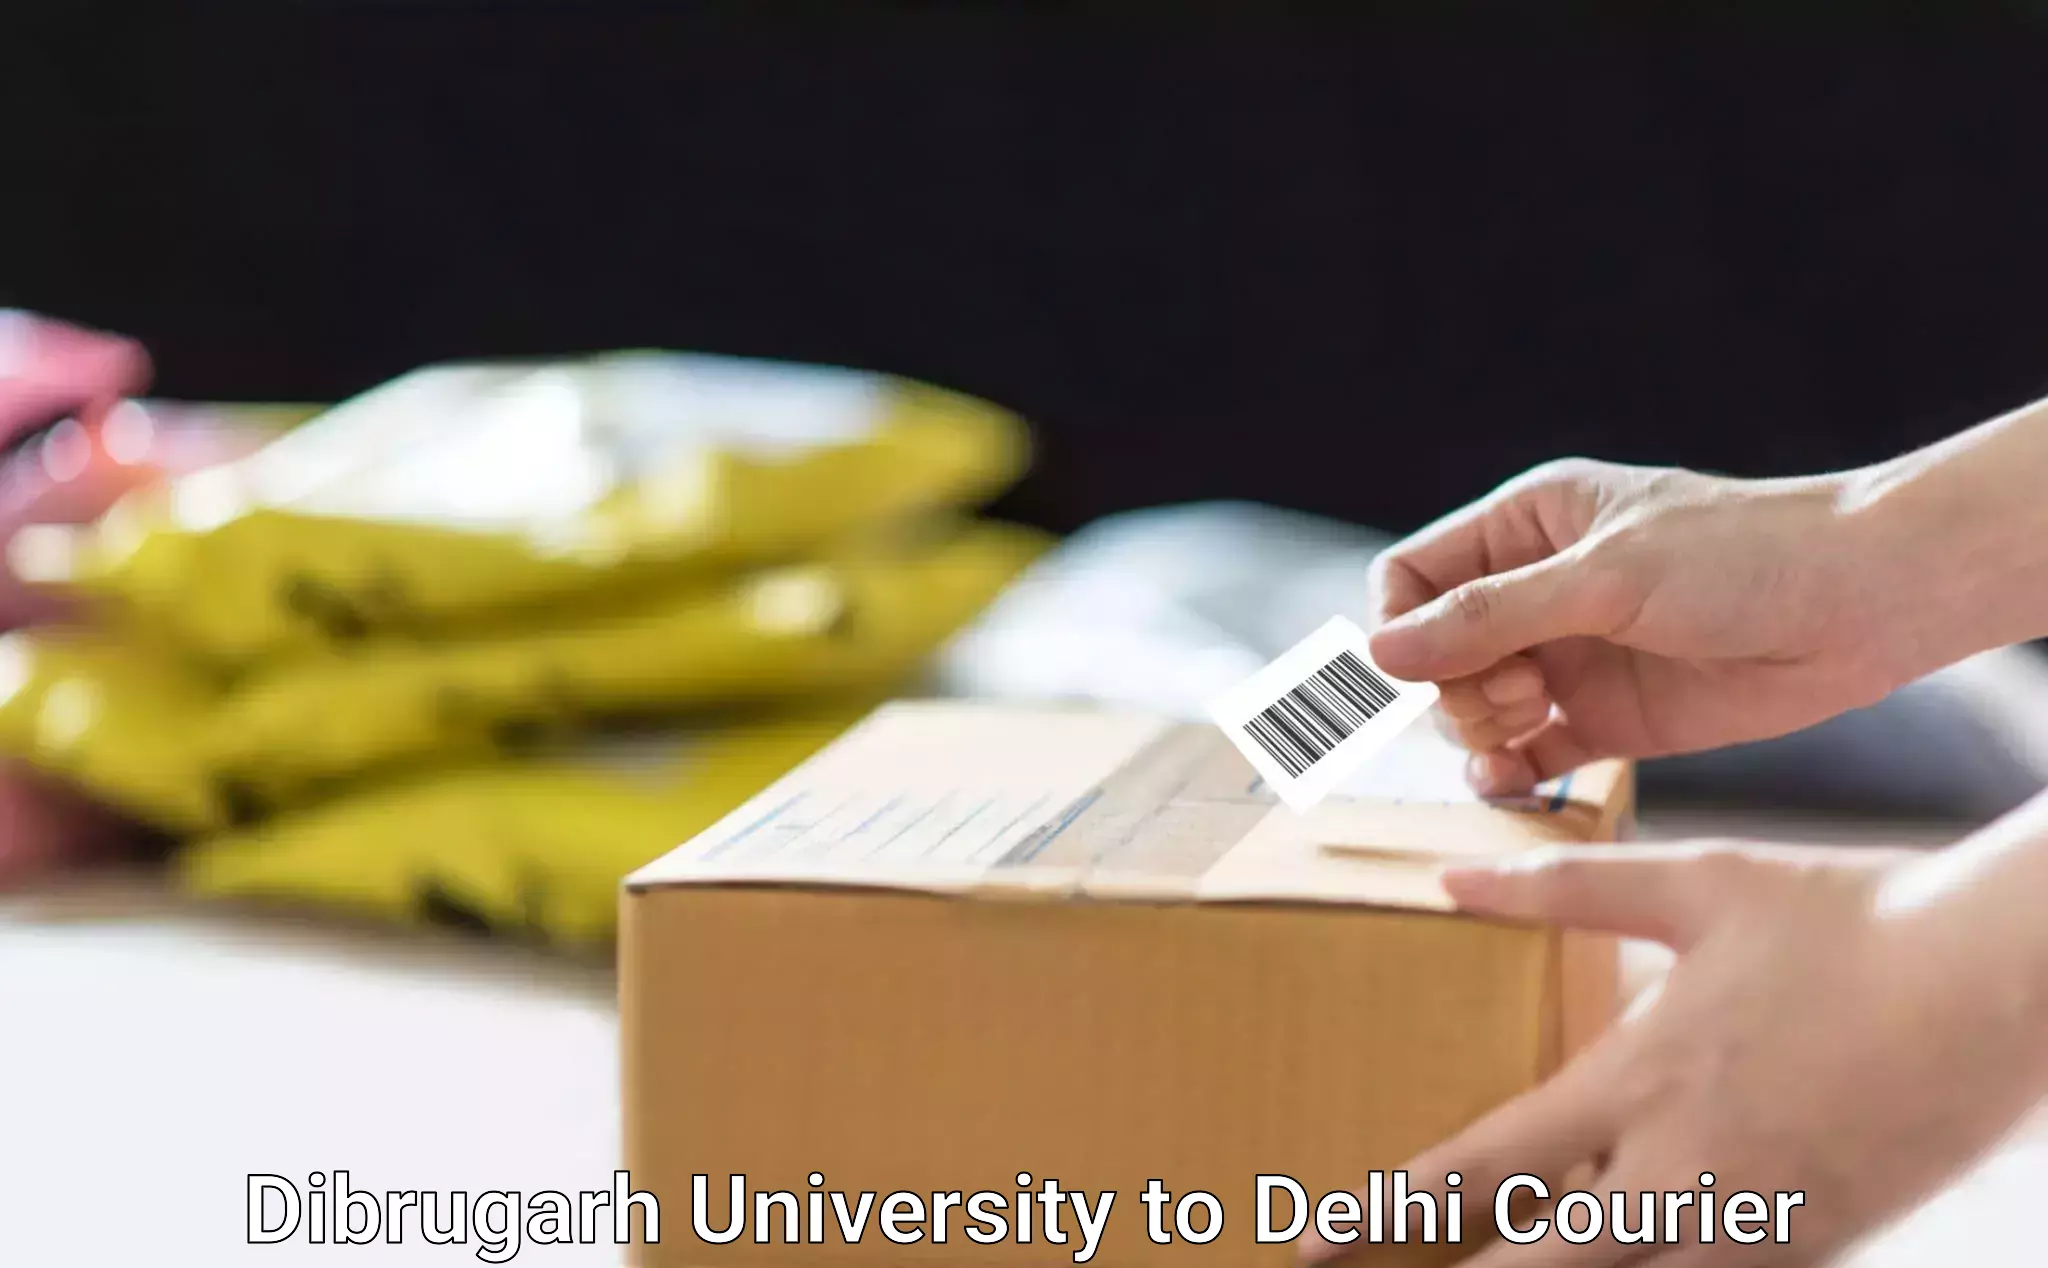 Local delivery service Dibrugarh University to IIT Delhi